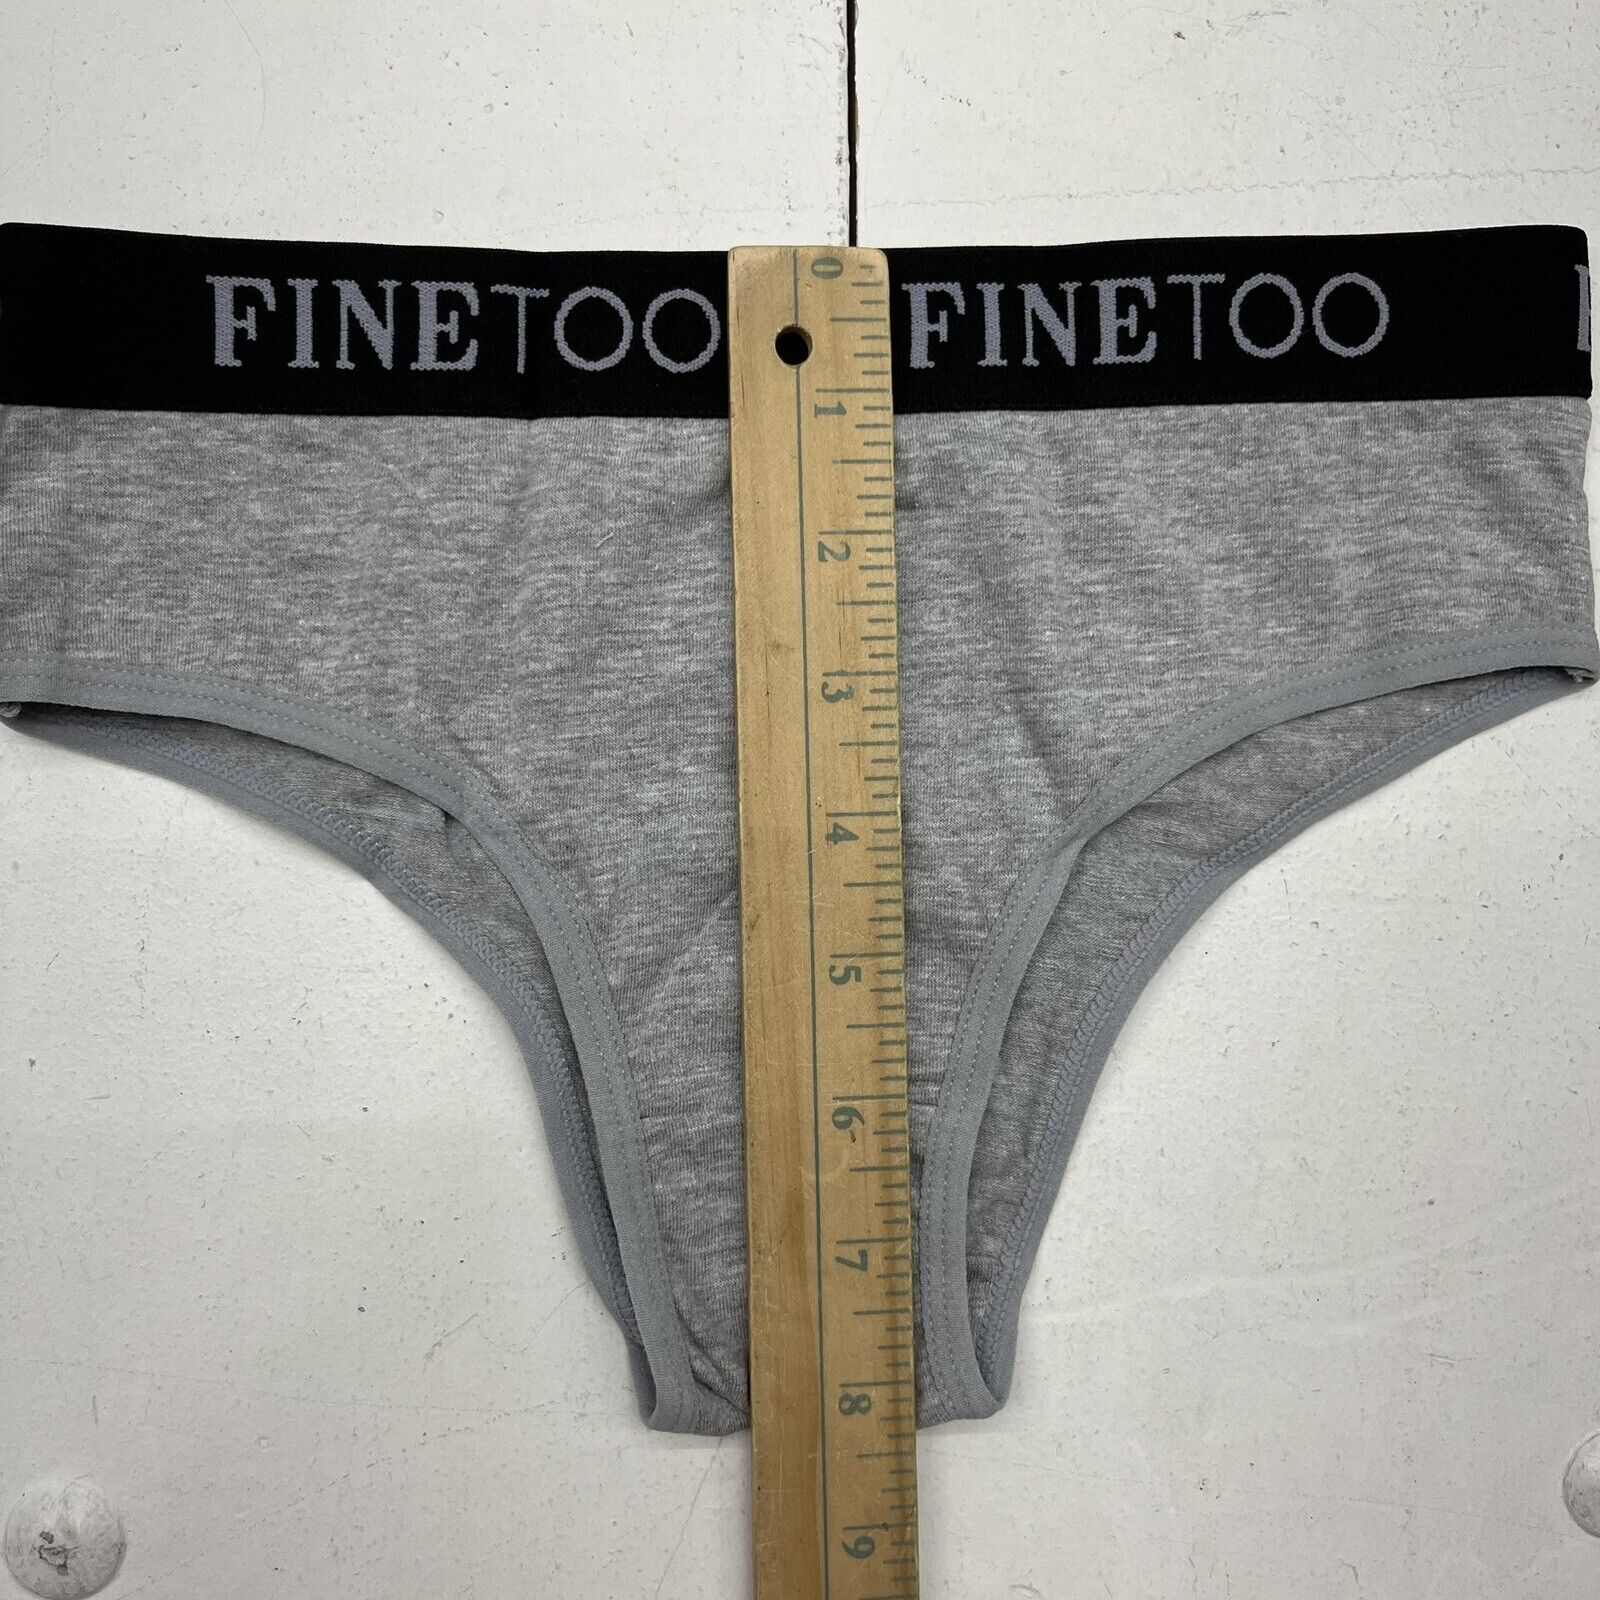 Finetoo 3 Pack Black/Blue/Gray Panties Women's Size Medium NEW